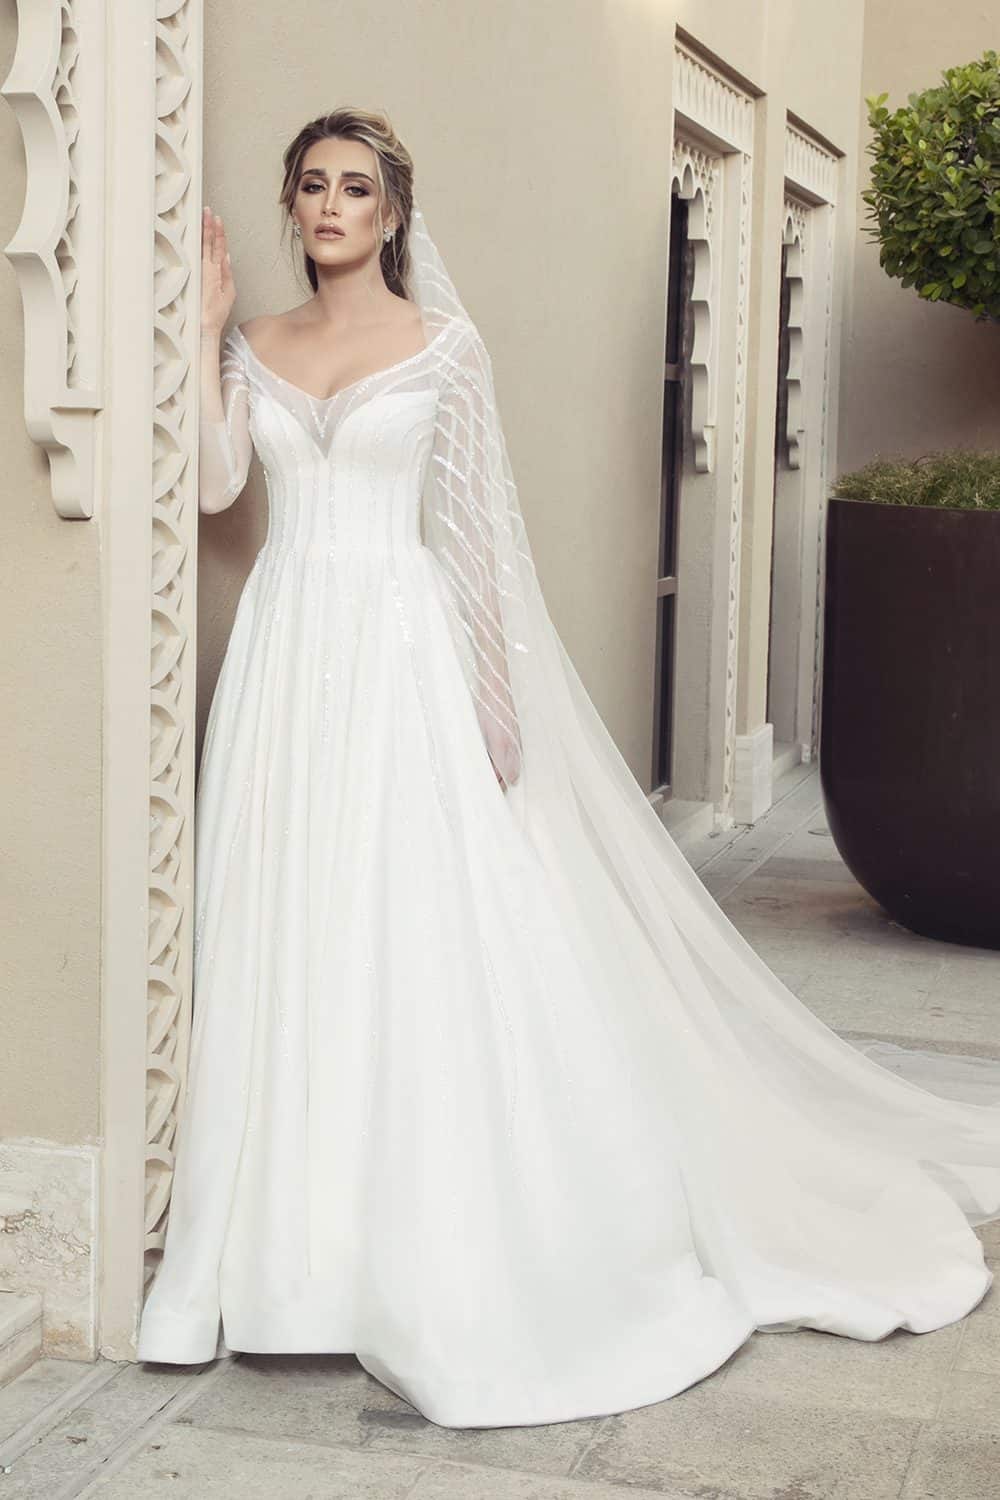 13 Celebrity Wedding Dress & Looks We Loved | Nykaa's Beauty Book